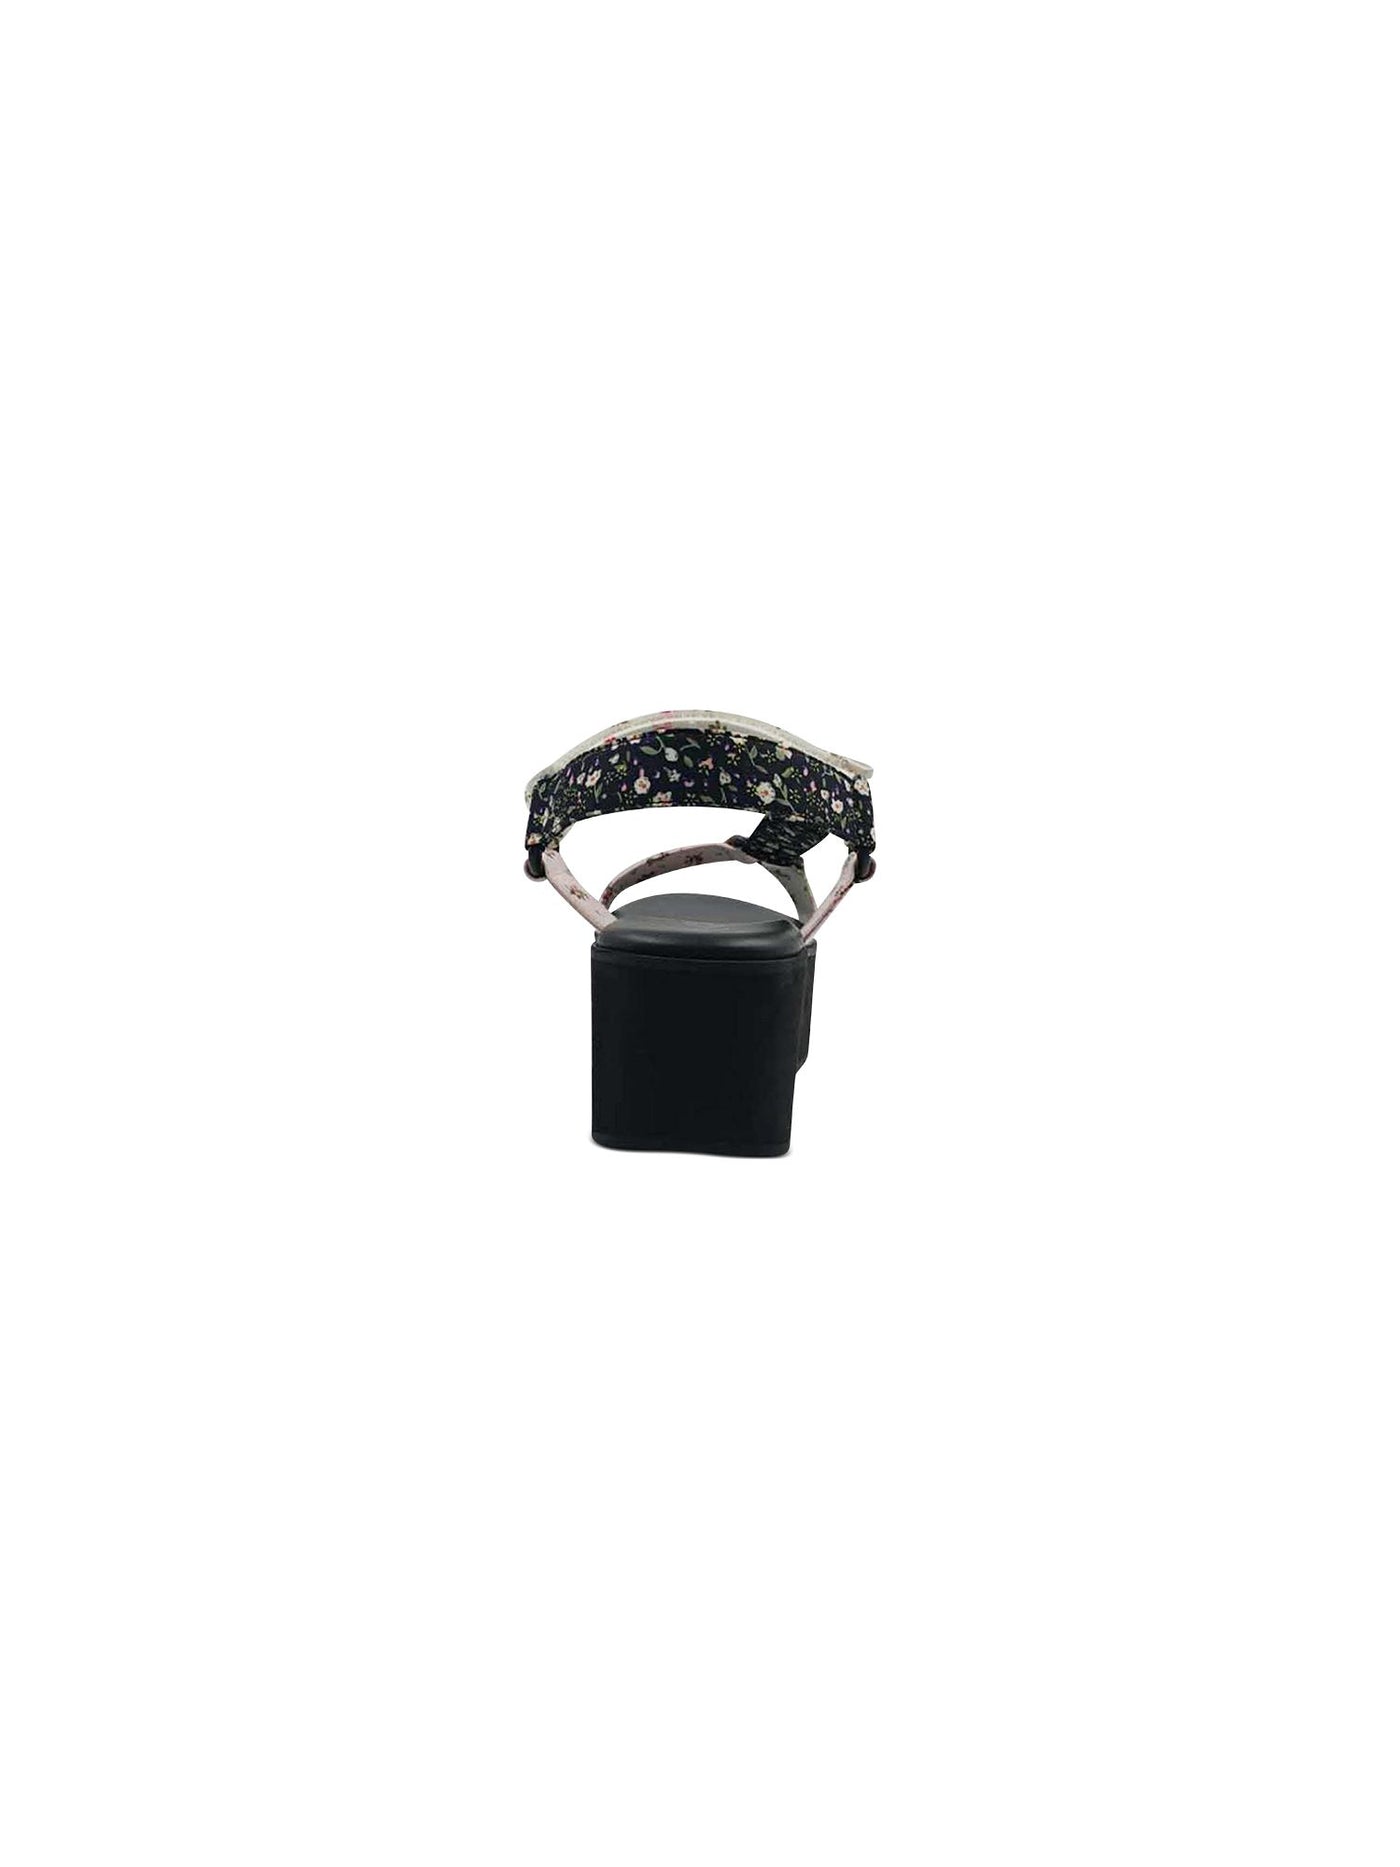 WILD PAIR Womens Black Floral Flatform Ring Hardware Asymmetrical Cushioned Adjustable Strap Sawwyer Round Toe Platform Slip On Slingback Sandal 7.5 M